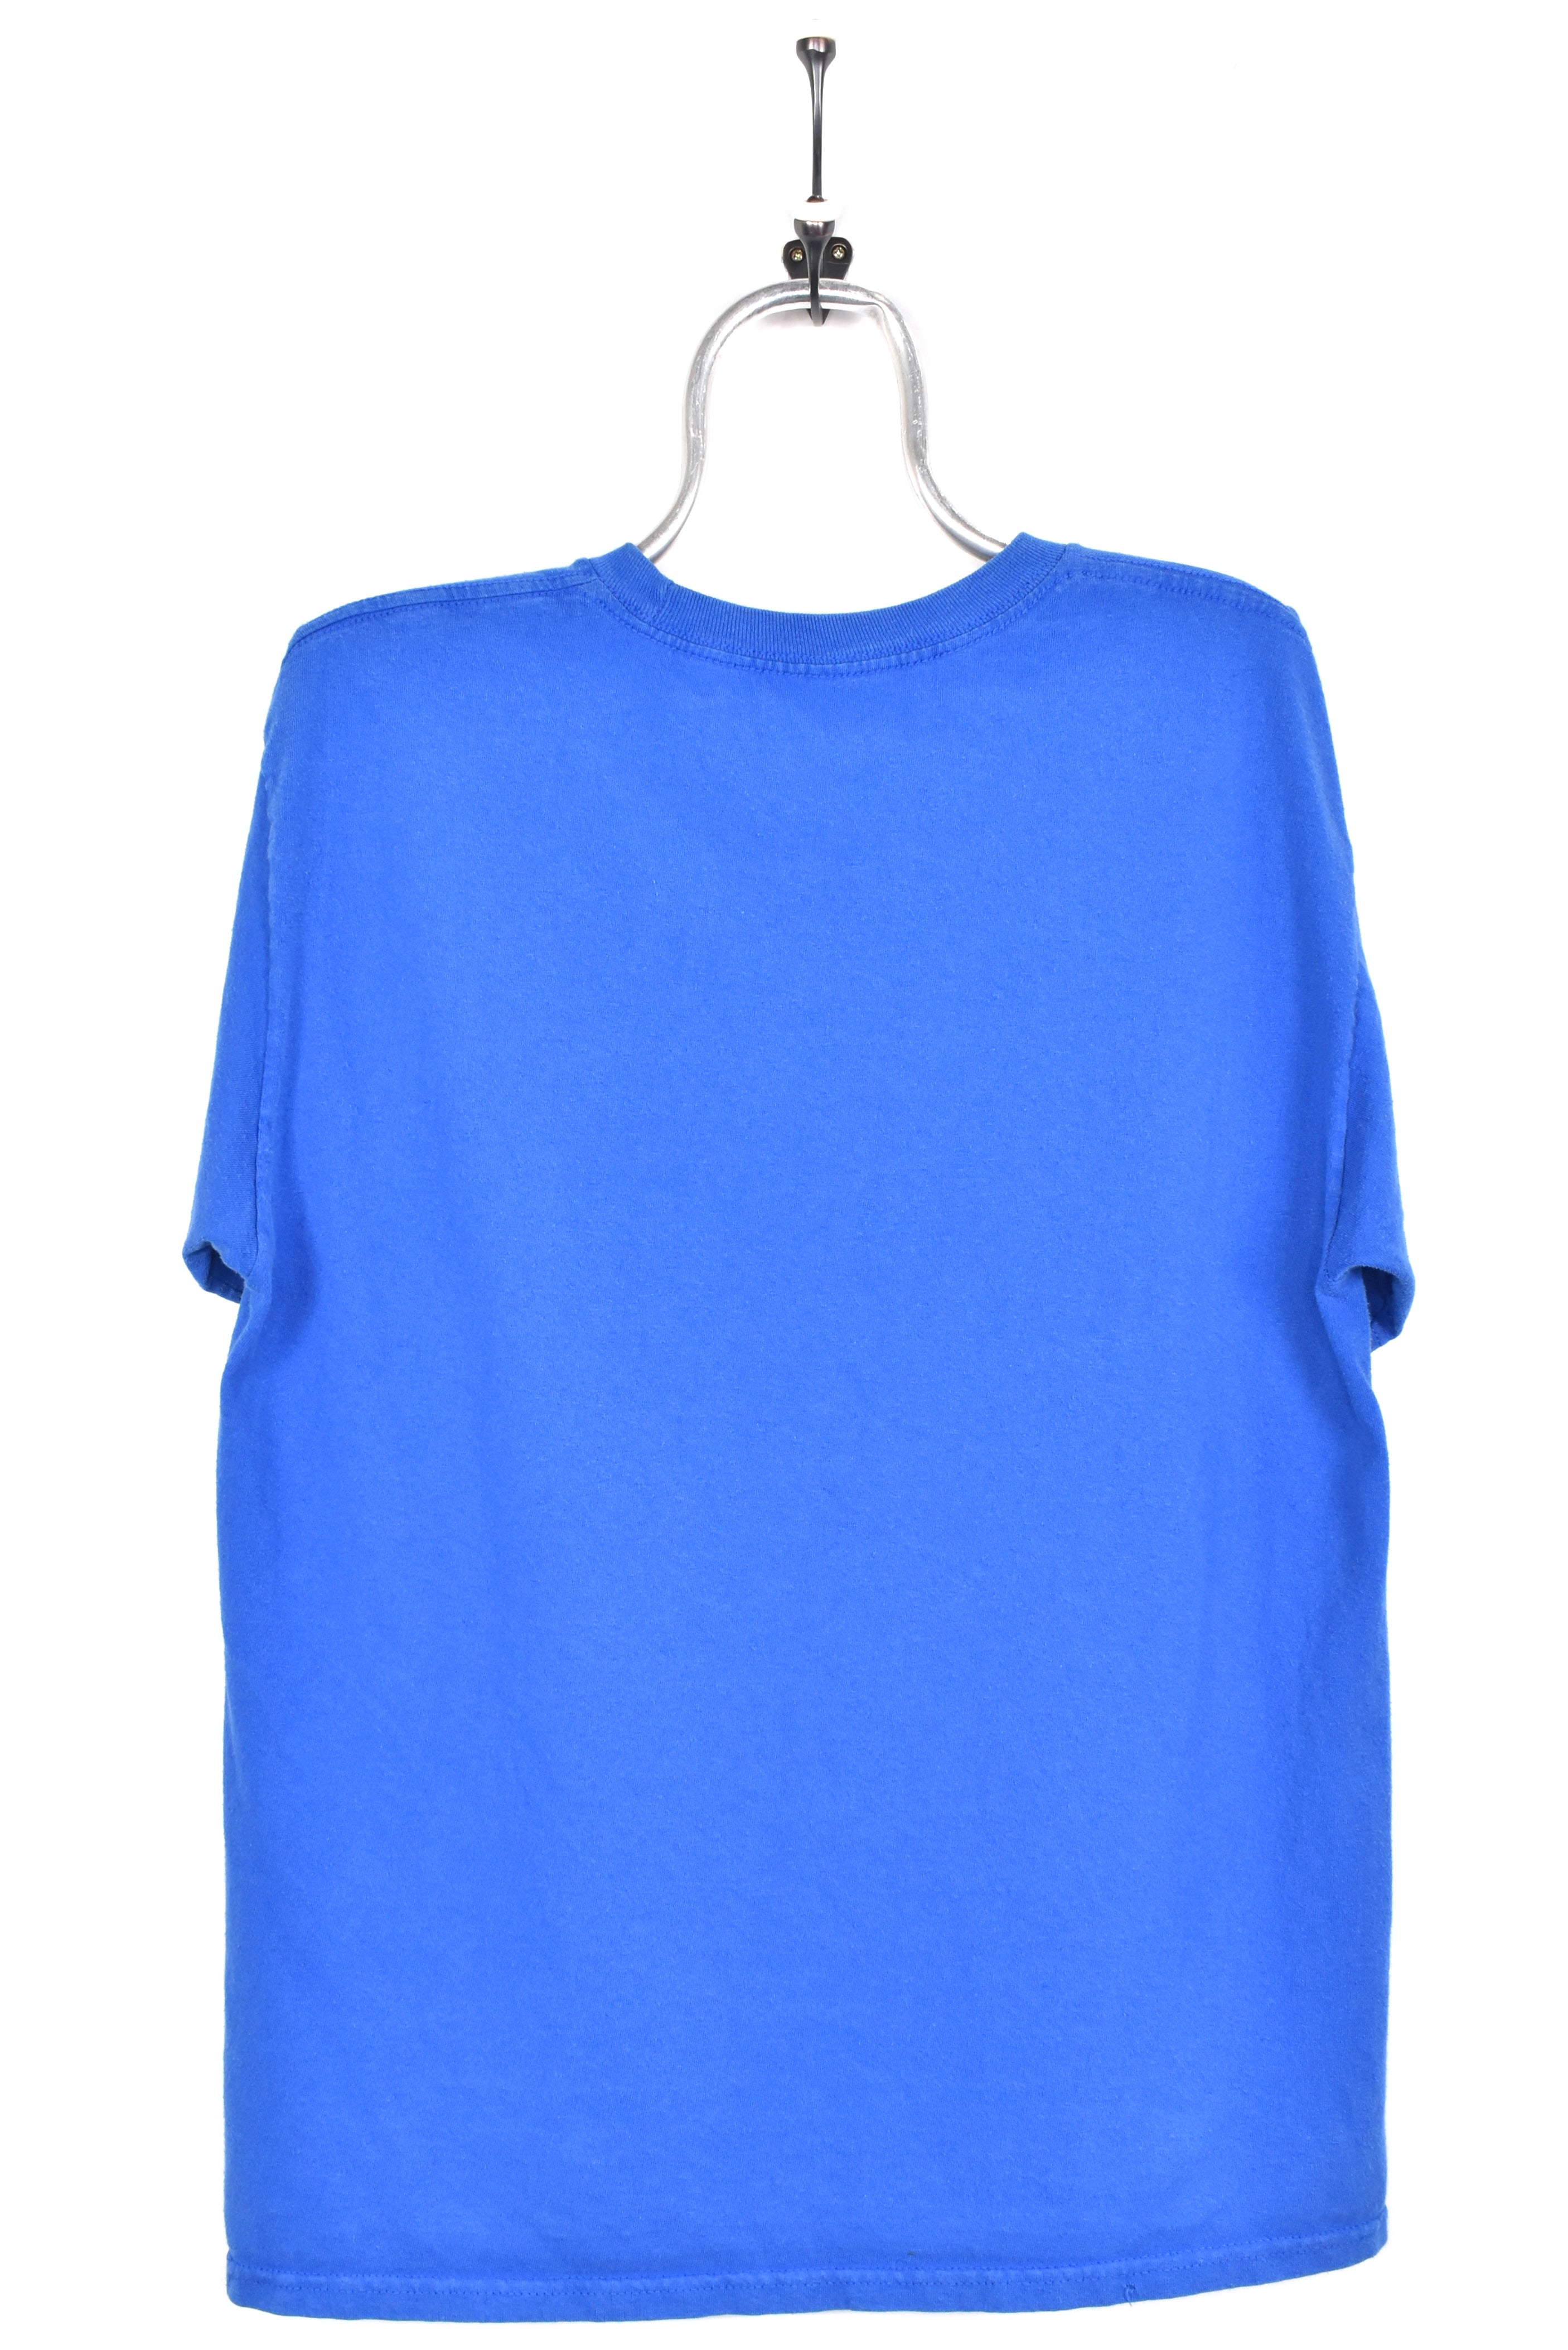 Modern Toronto Blue Jays shirt, MLB blue graphic tee - AU Large PRO SPORT